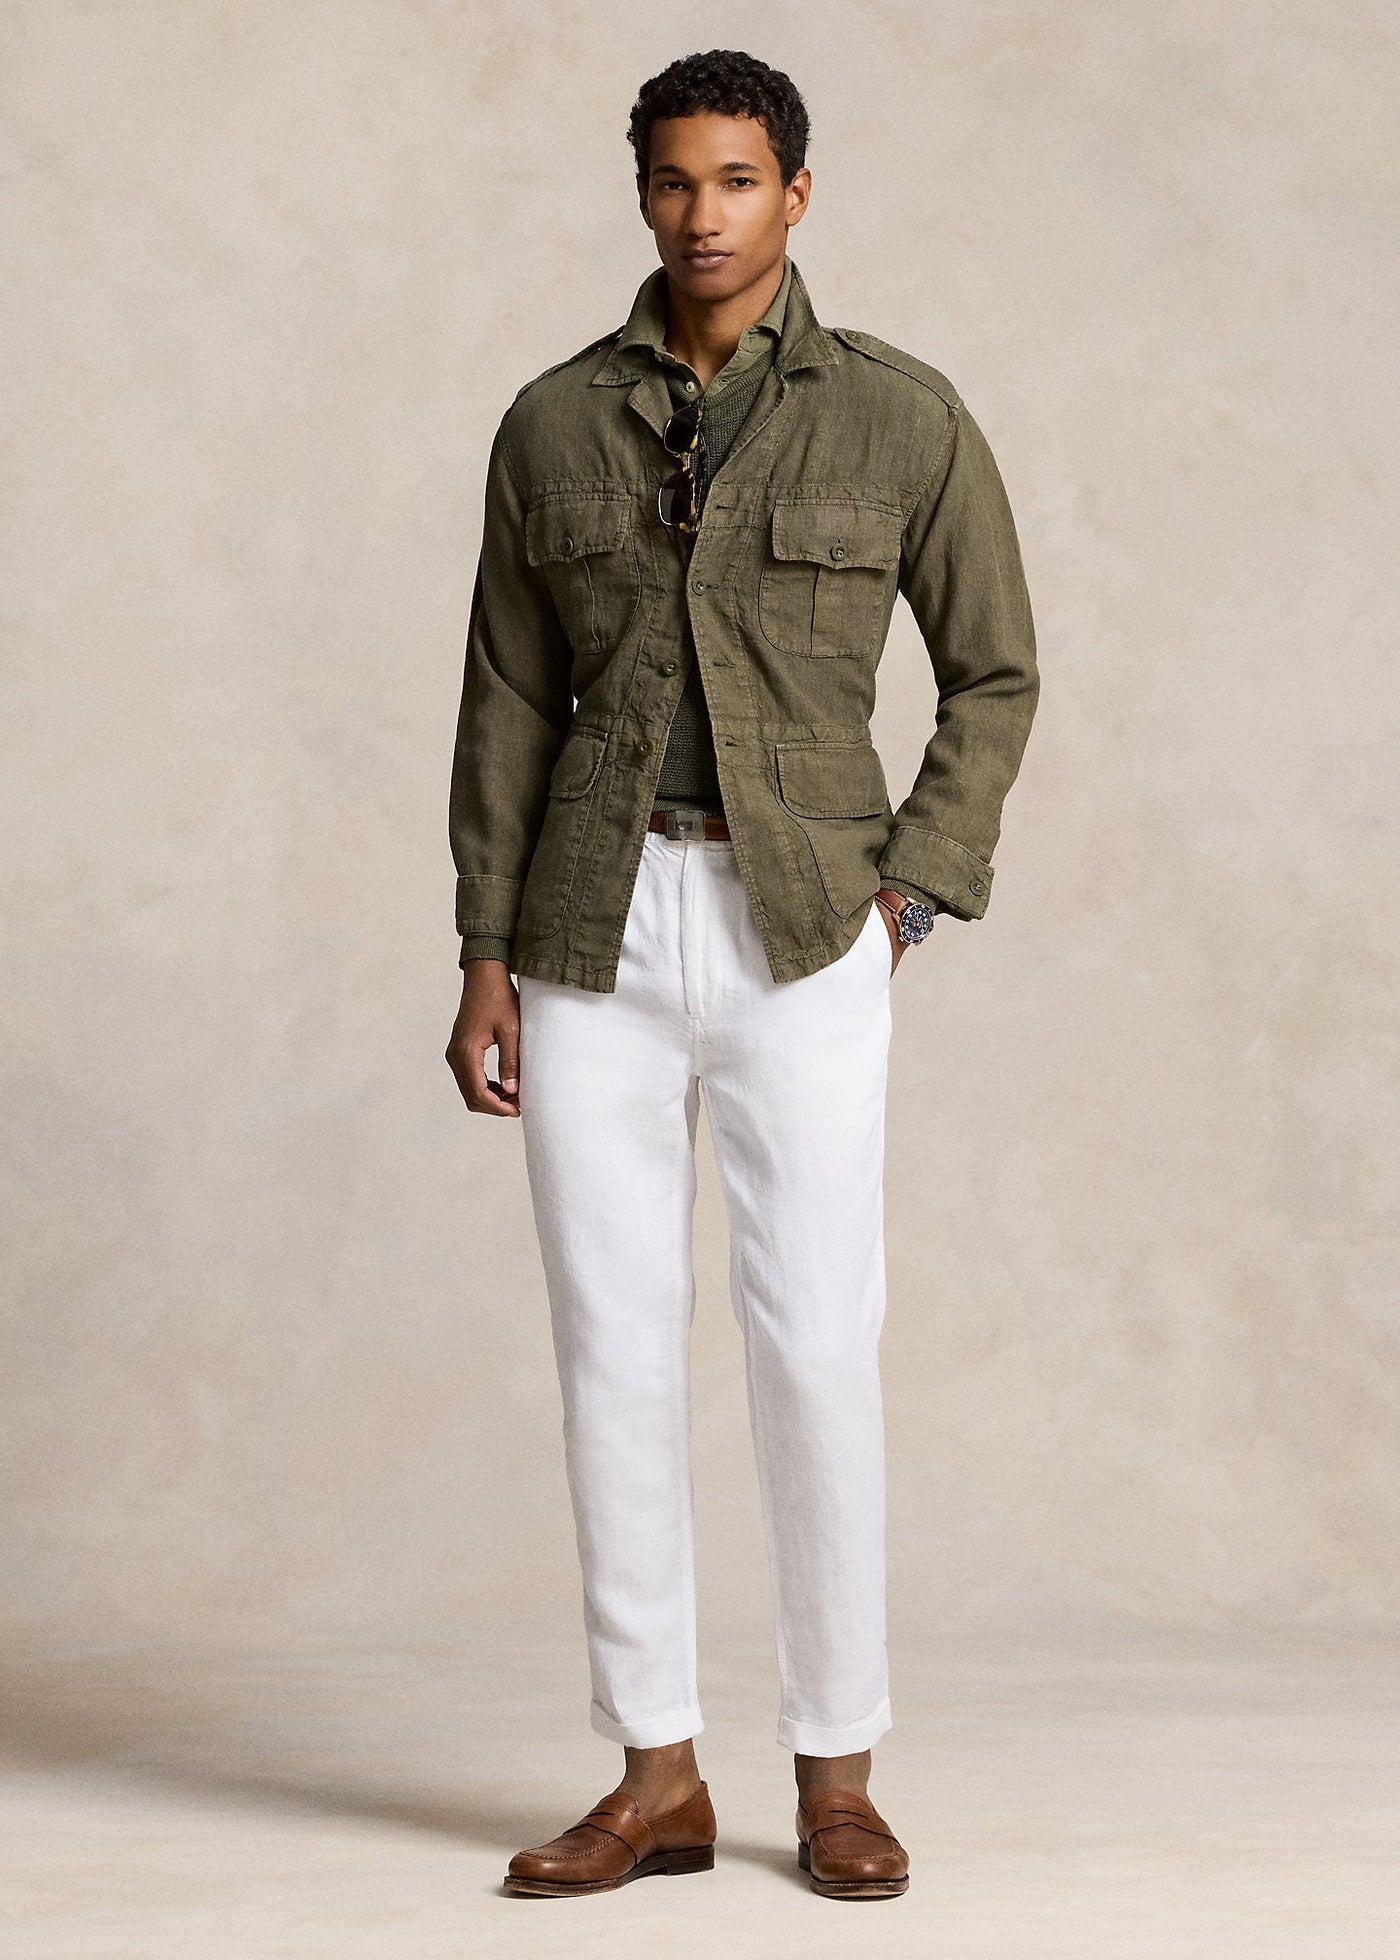 Polo Ralph Lauren - Pantalon blanc slim fuselé Polo Prepster lin - Lothaire